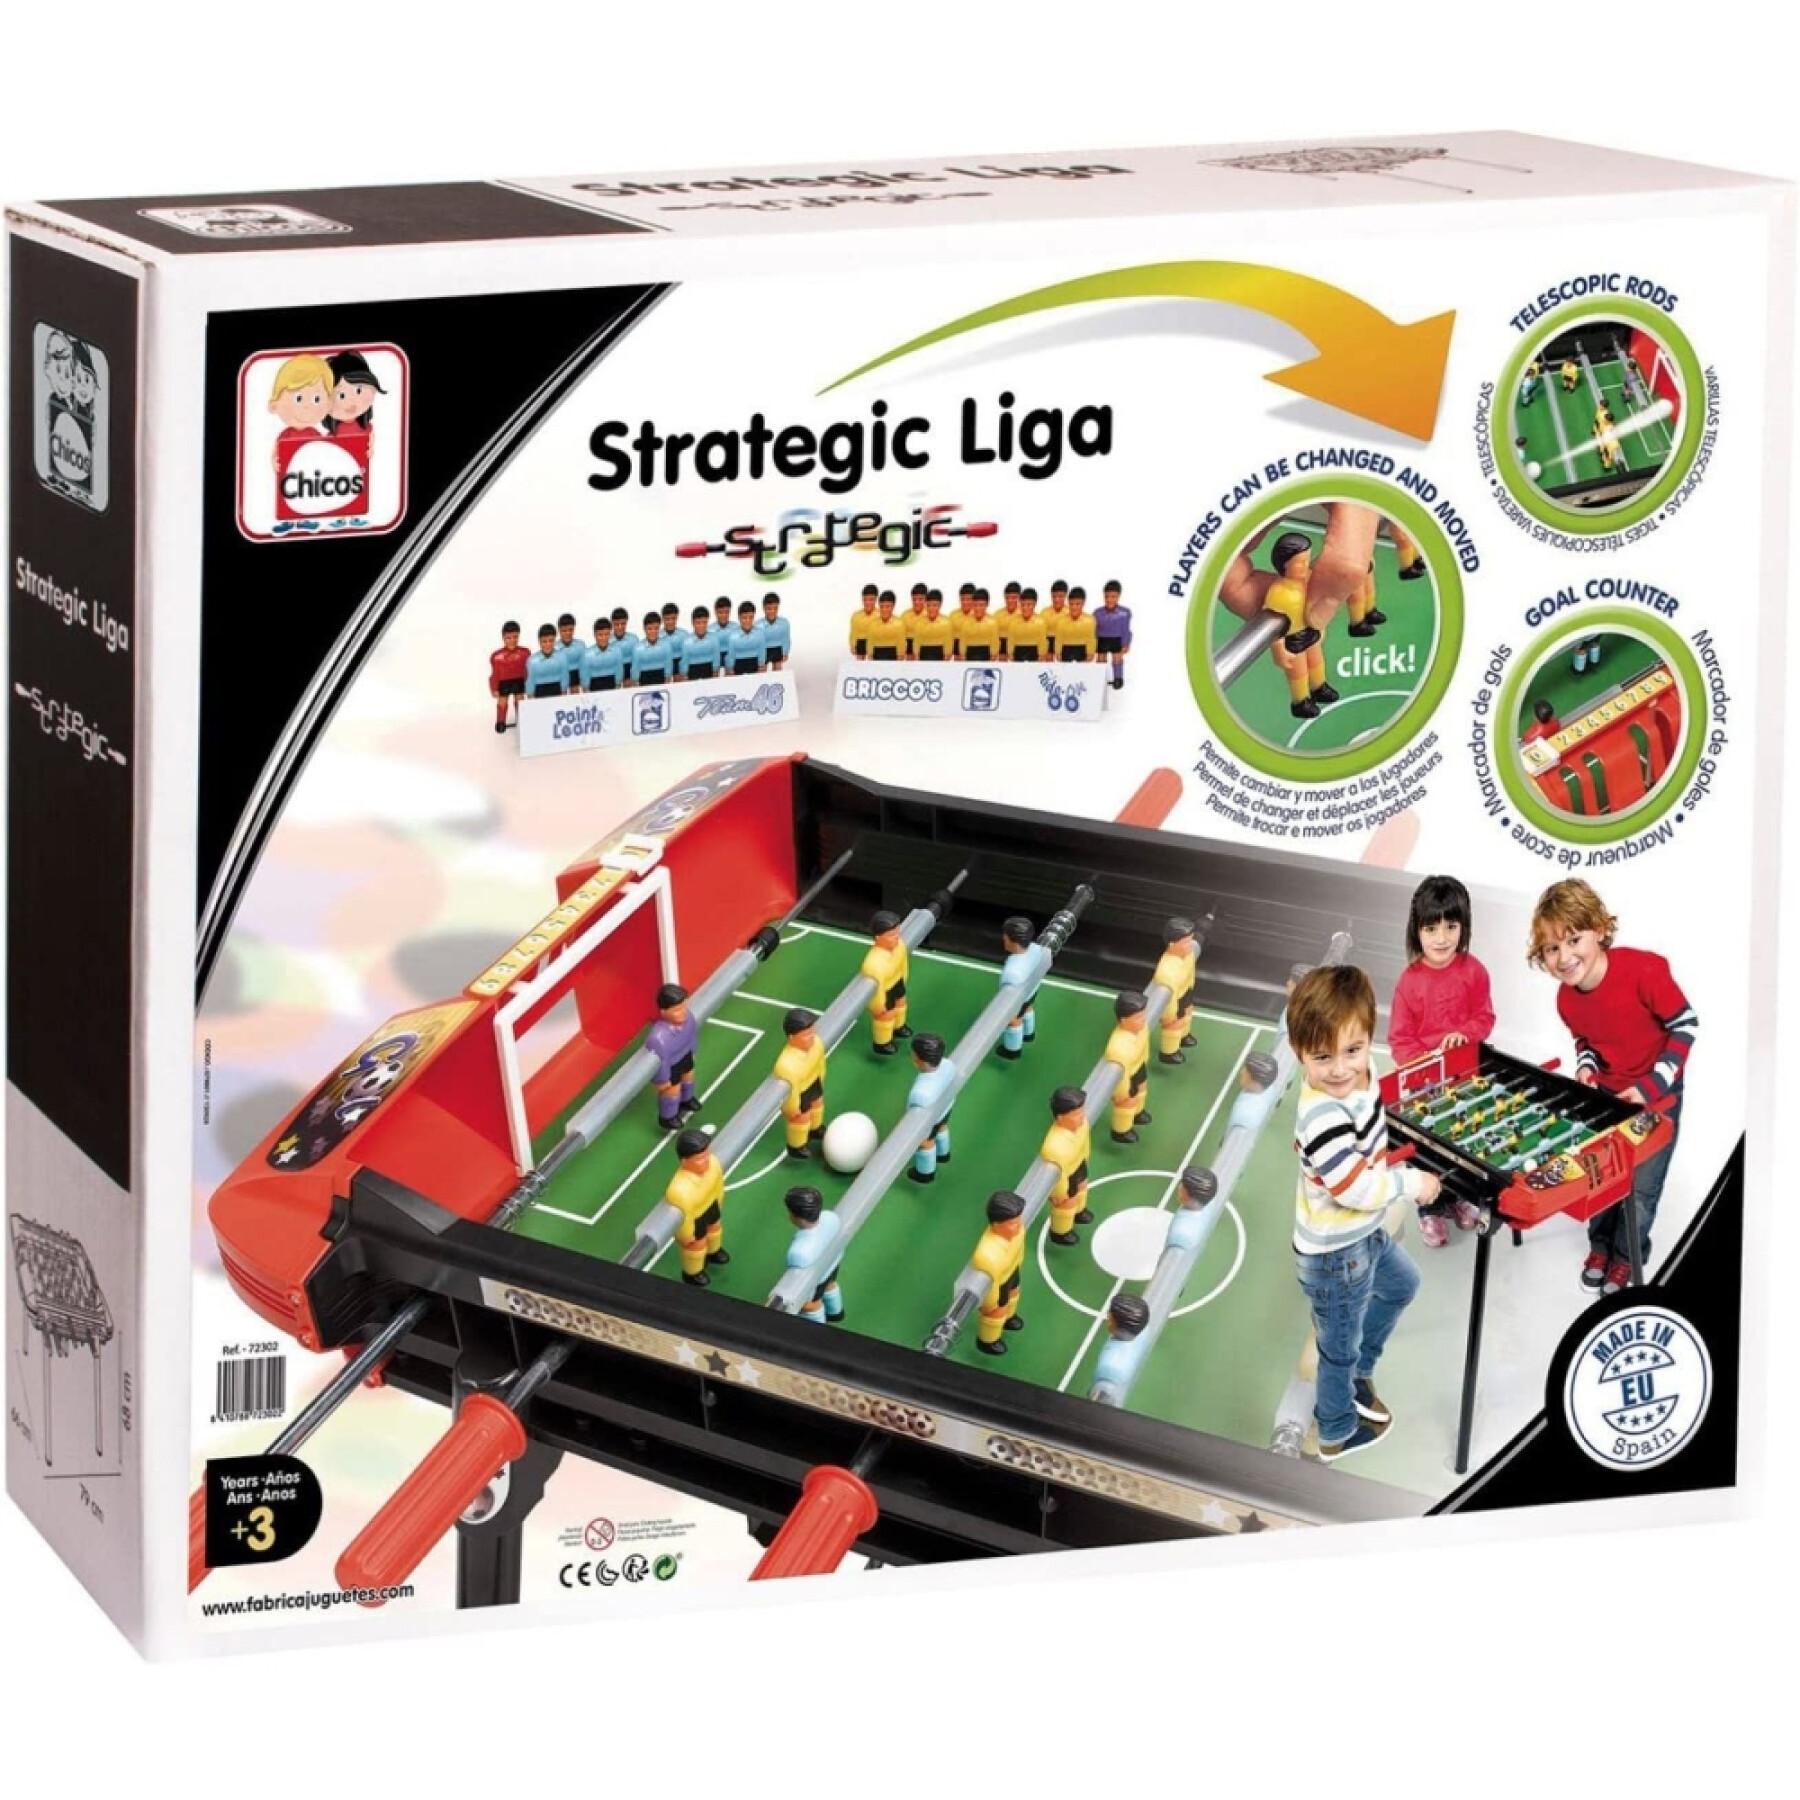 Table soccer Chicos Strategic Liga